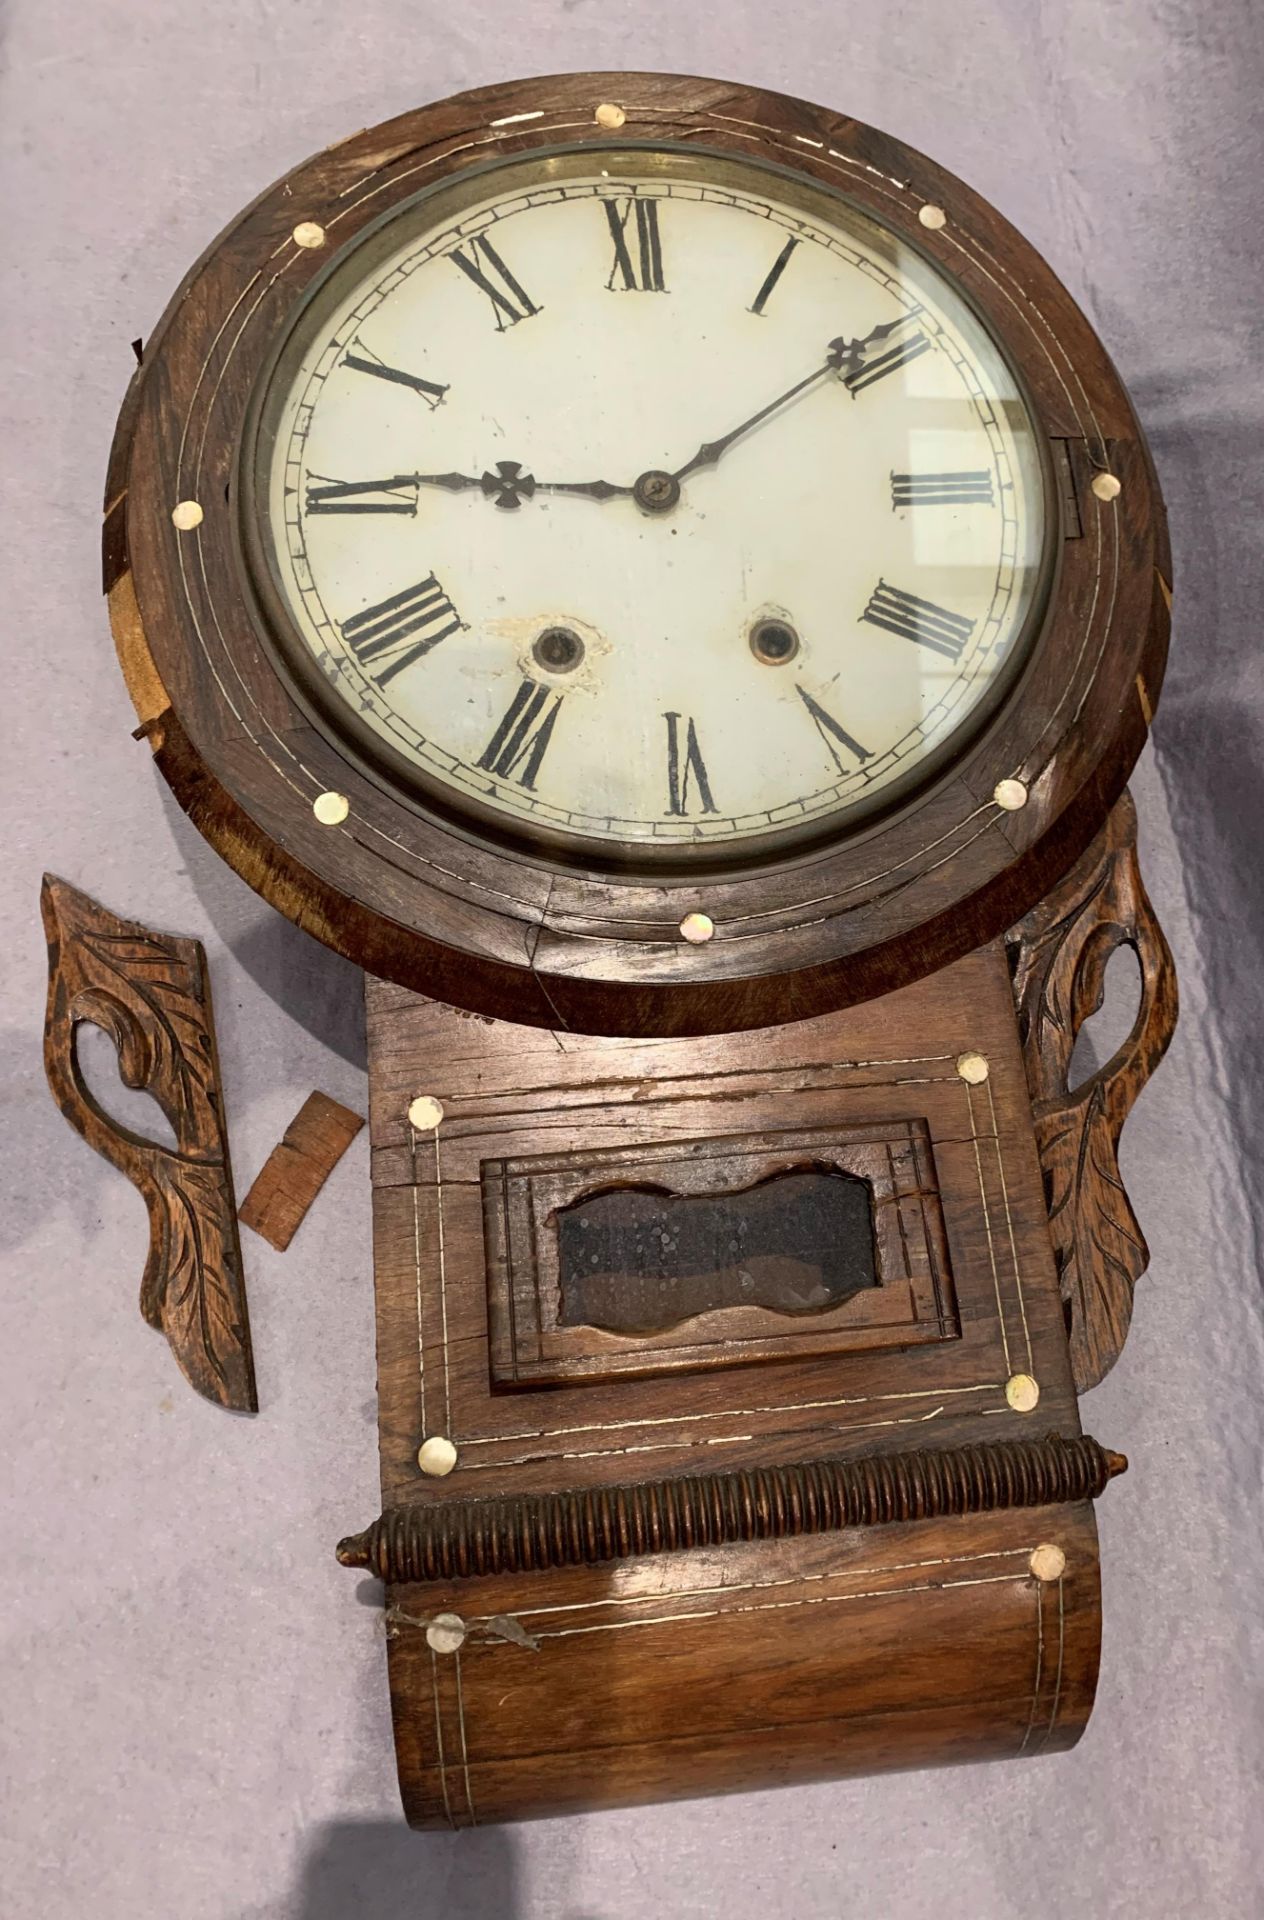 A walnut cased wall clock with circular dial - 70cm,